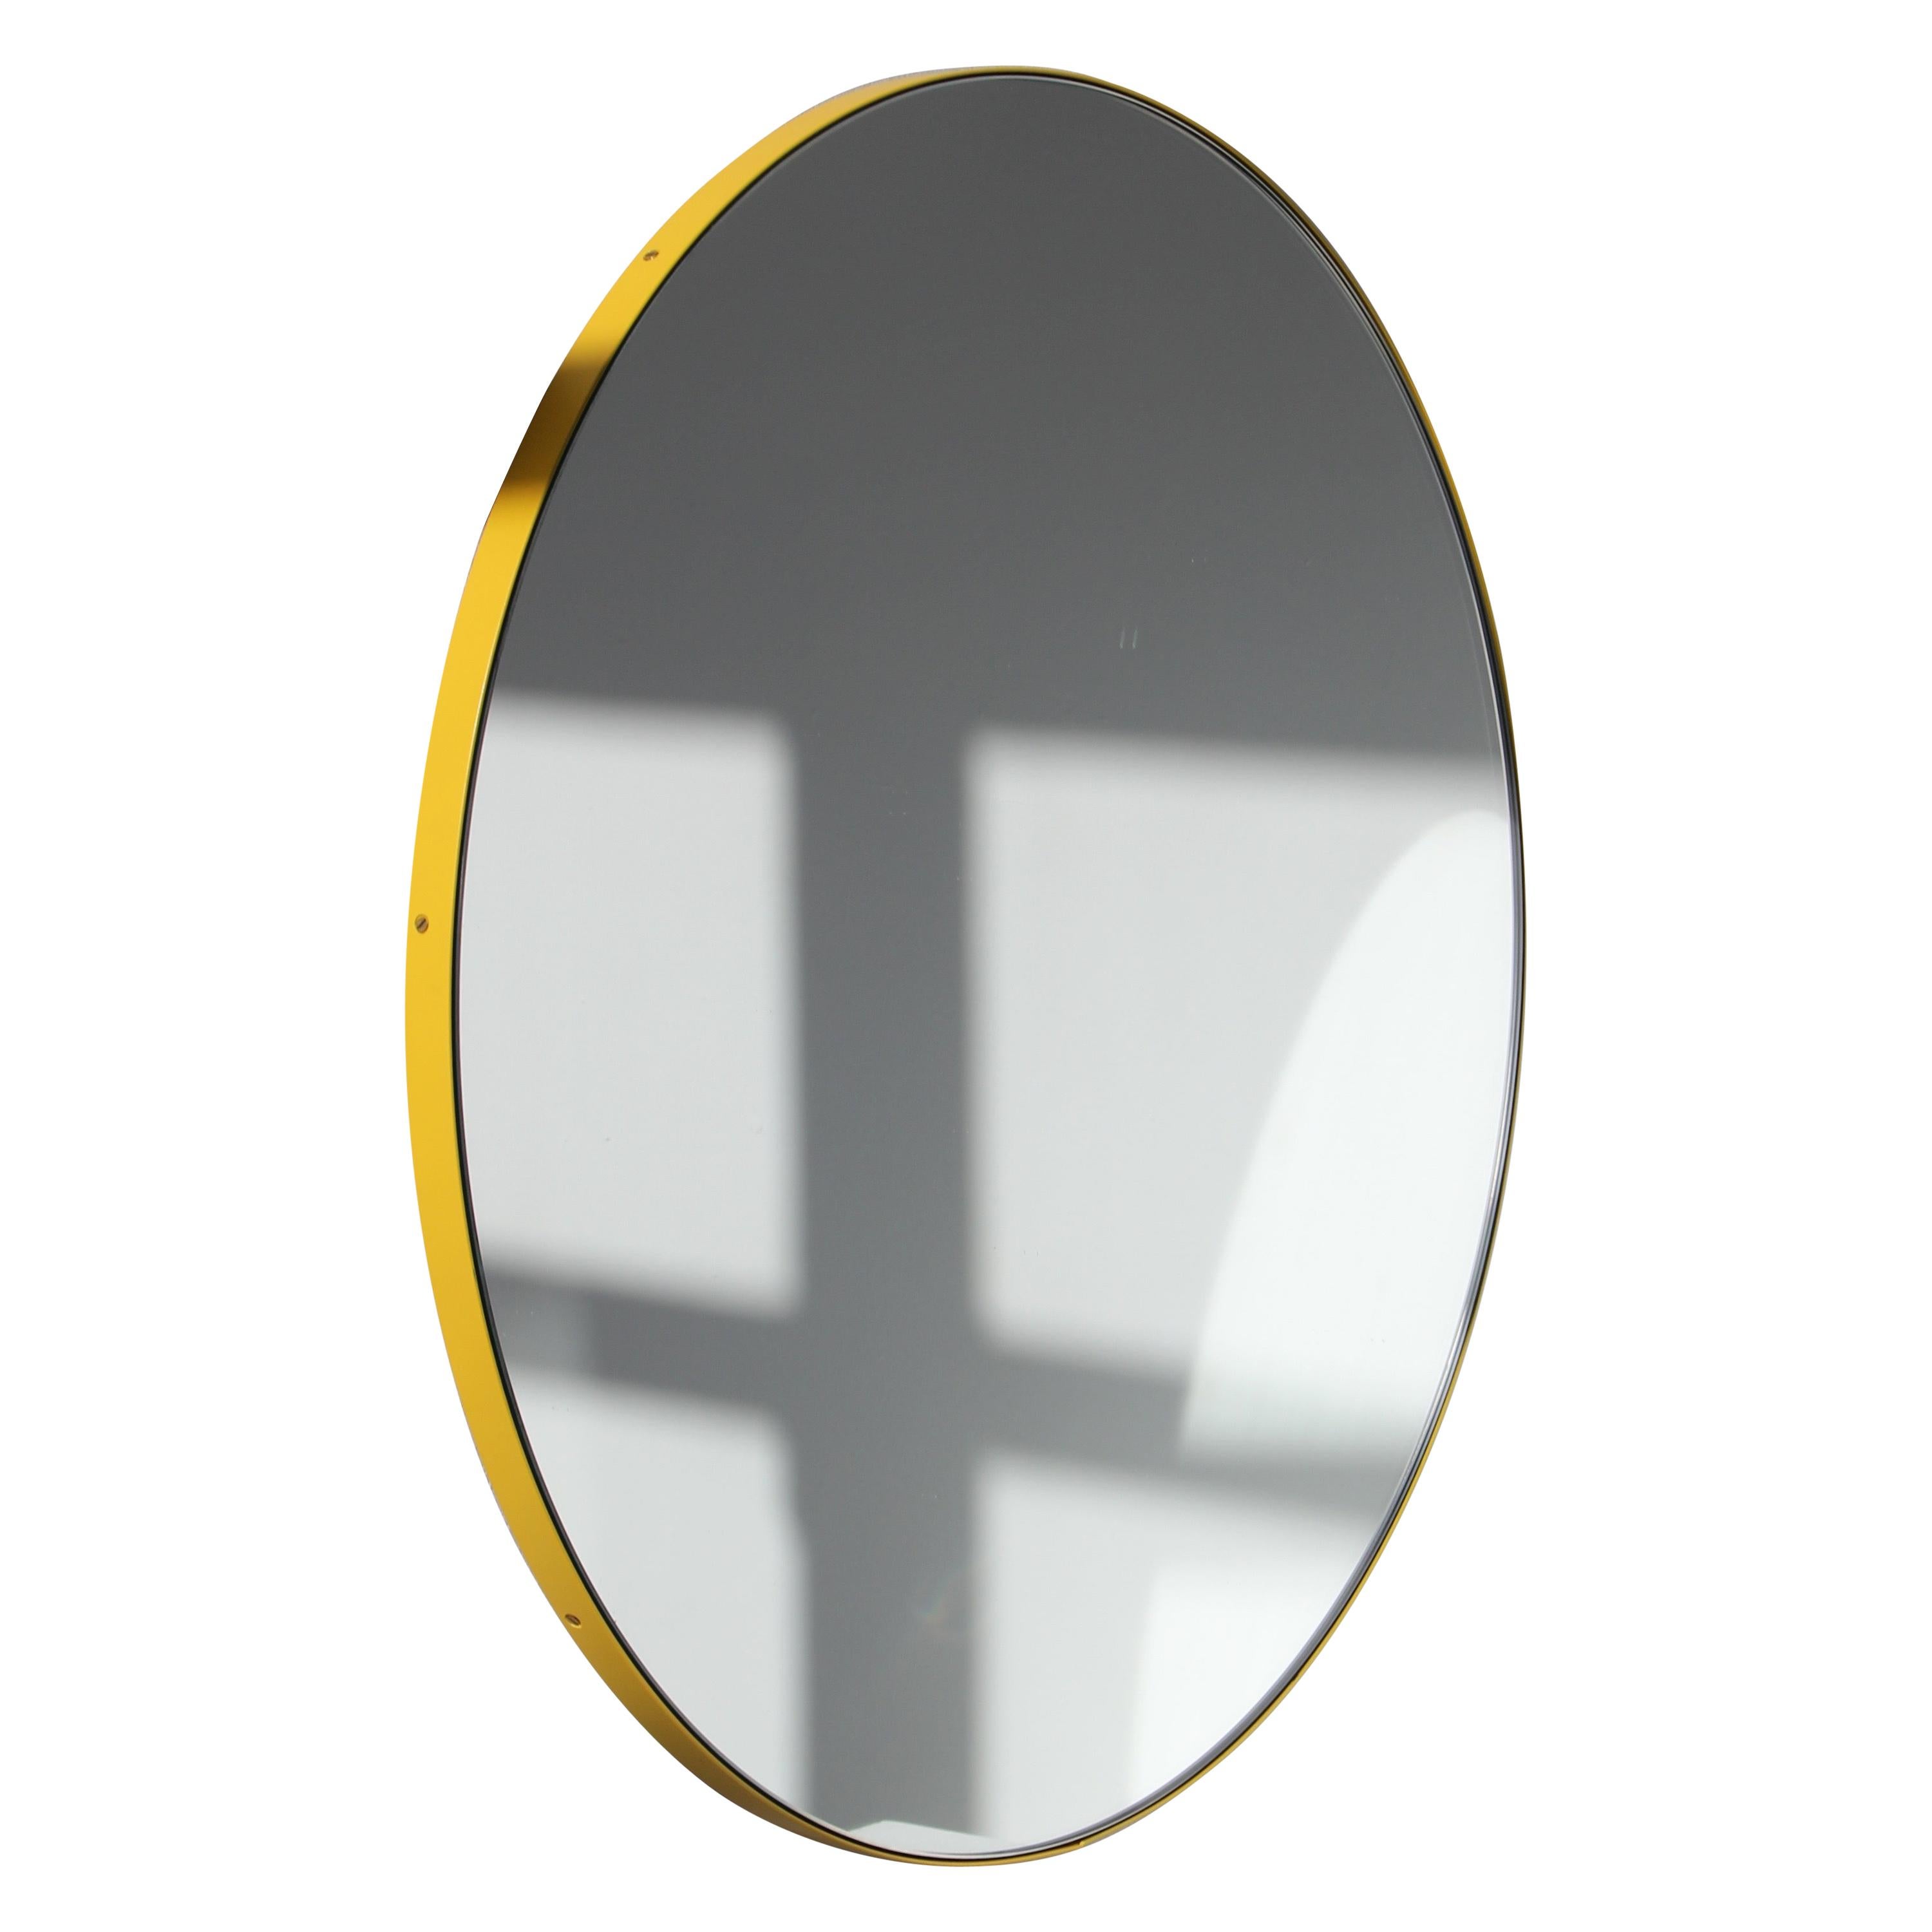 Orbis Round Mirror with Contemporary Yellow Frame, Regular